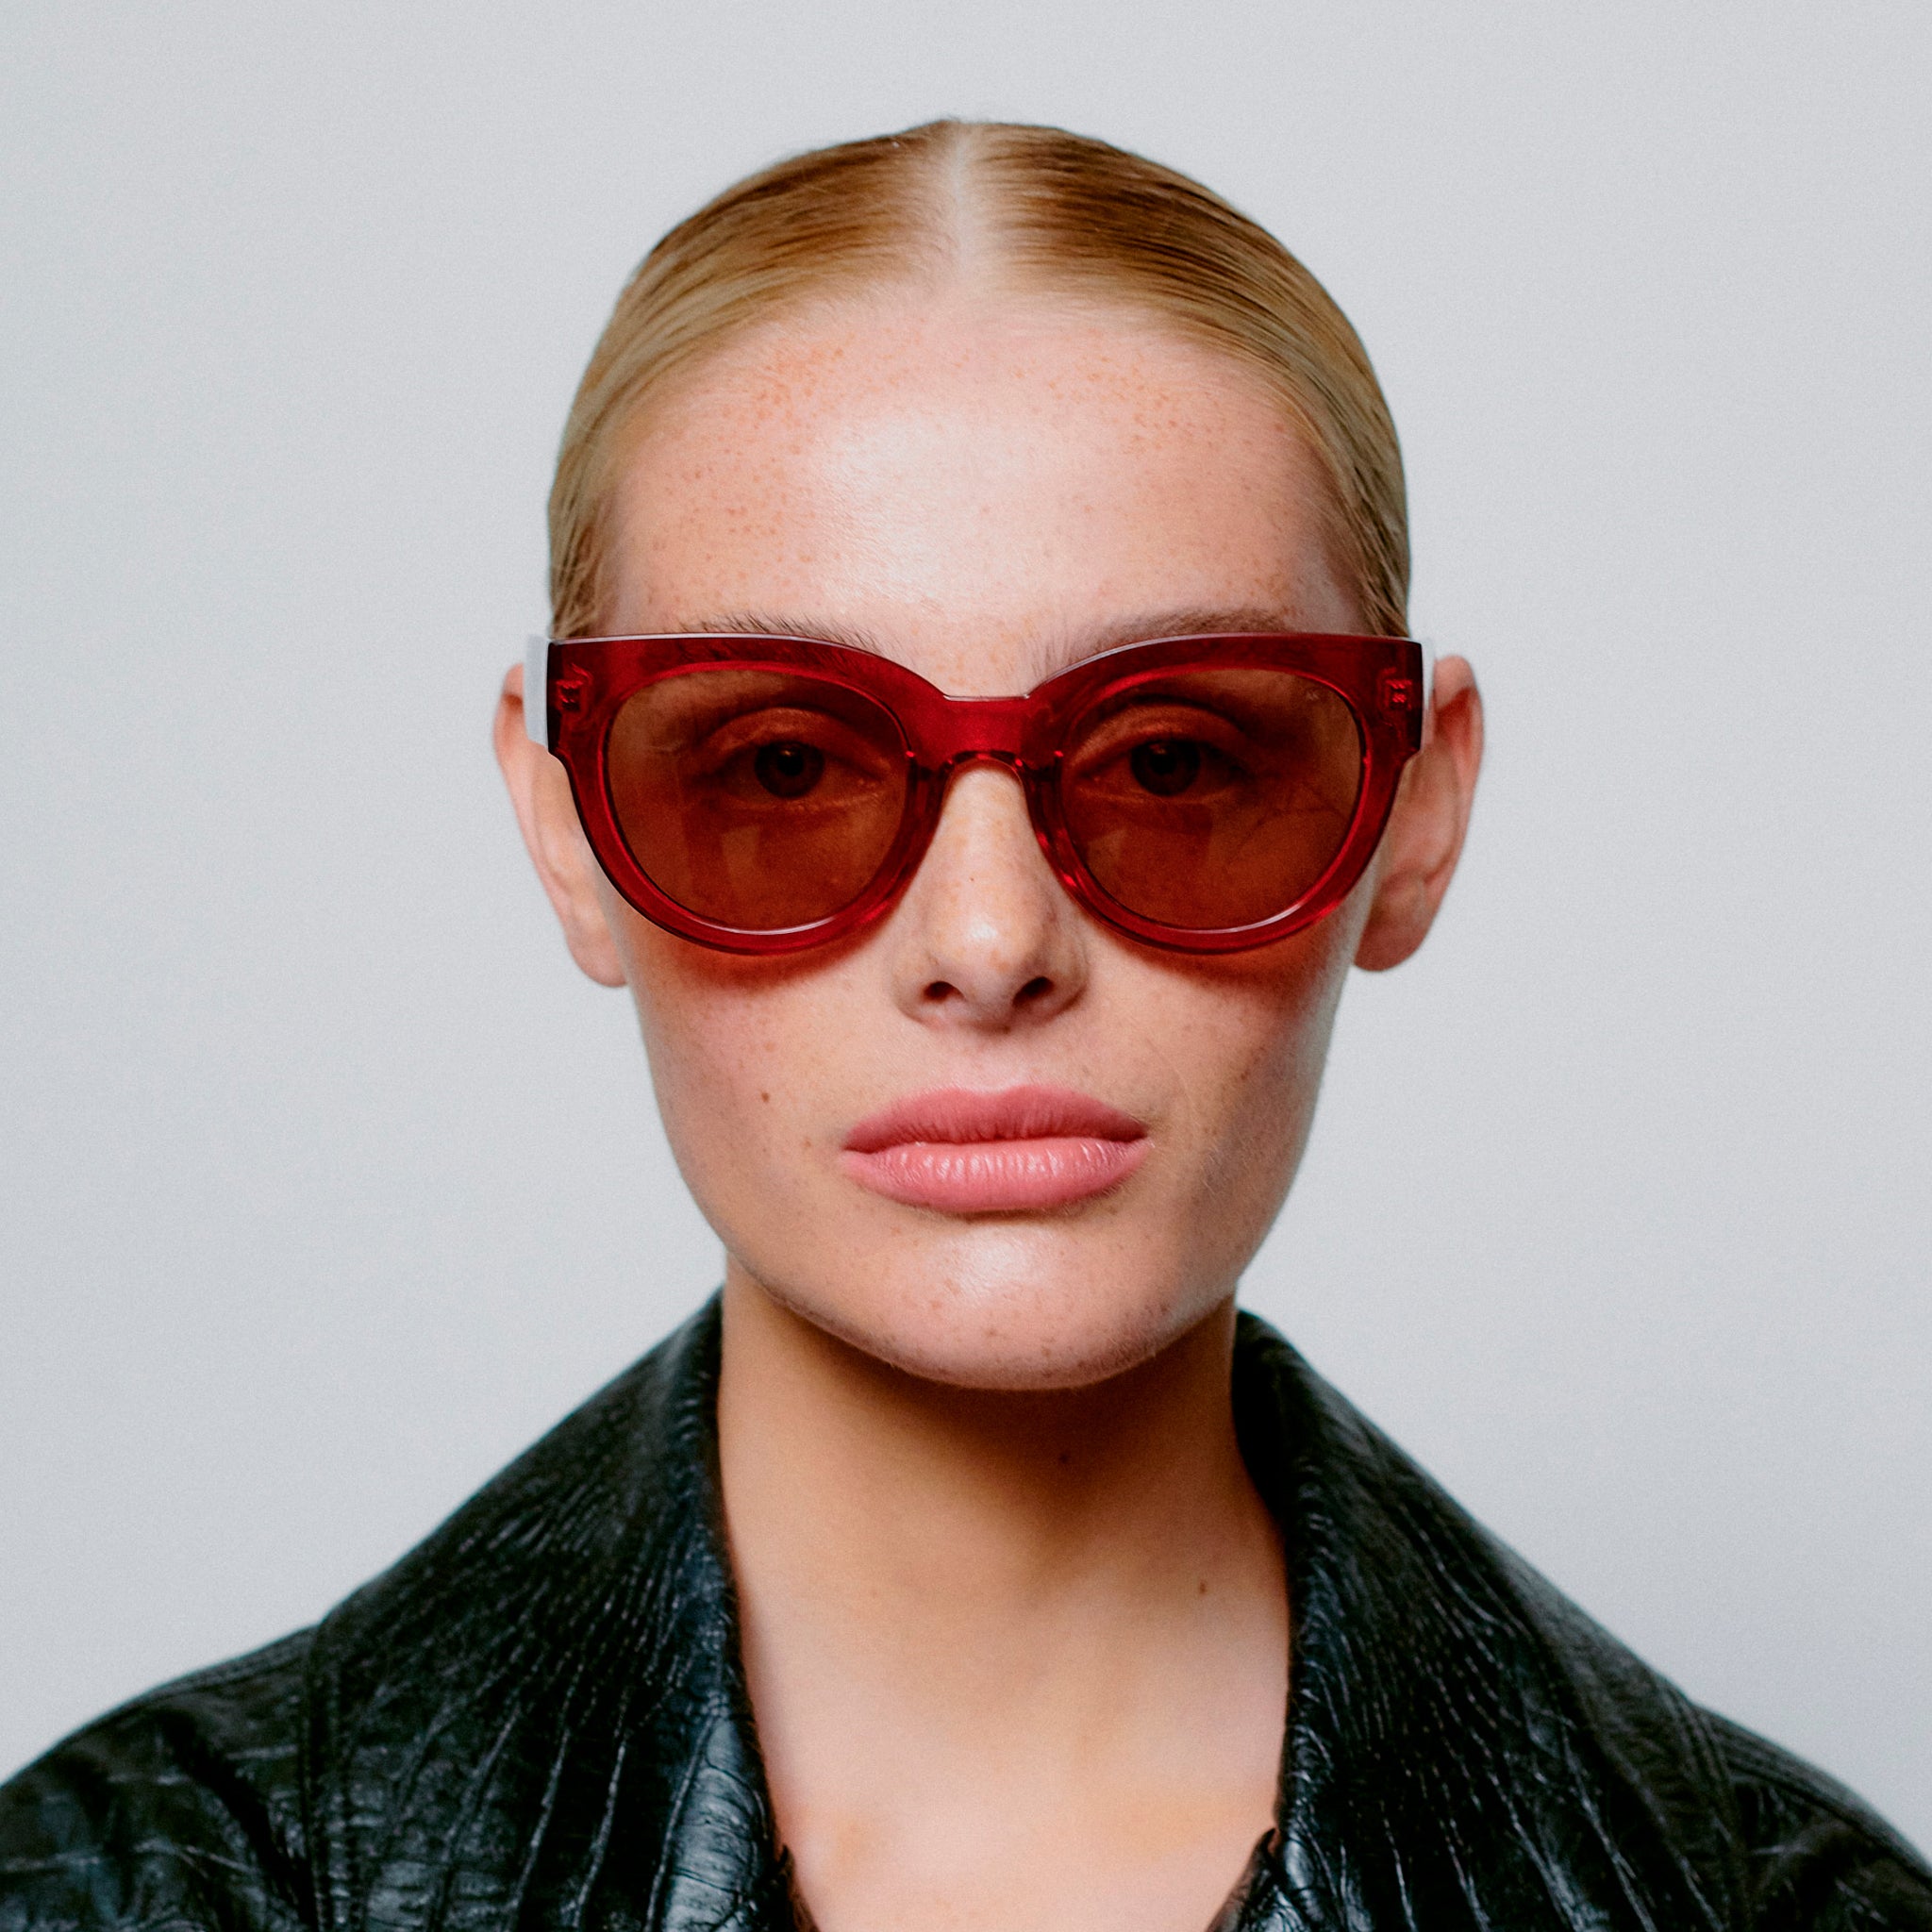 A.Kjaerbede Sunglasses - Lilly - Red Transparent